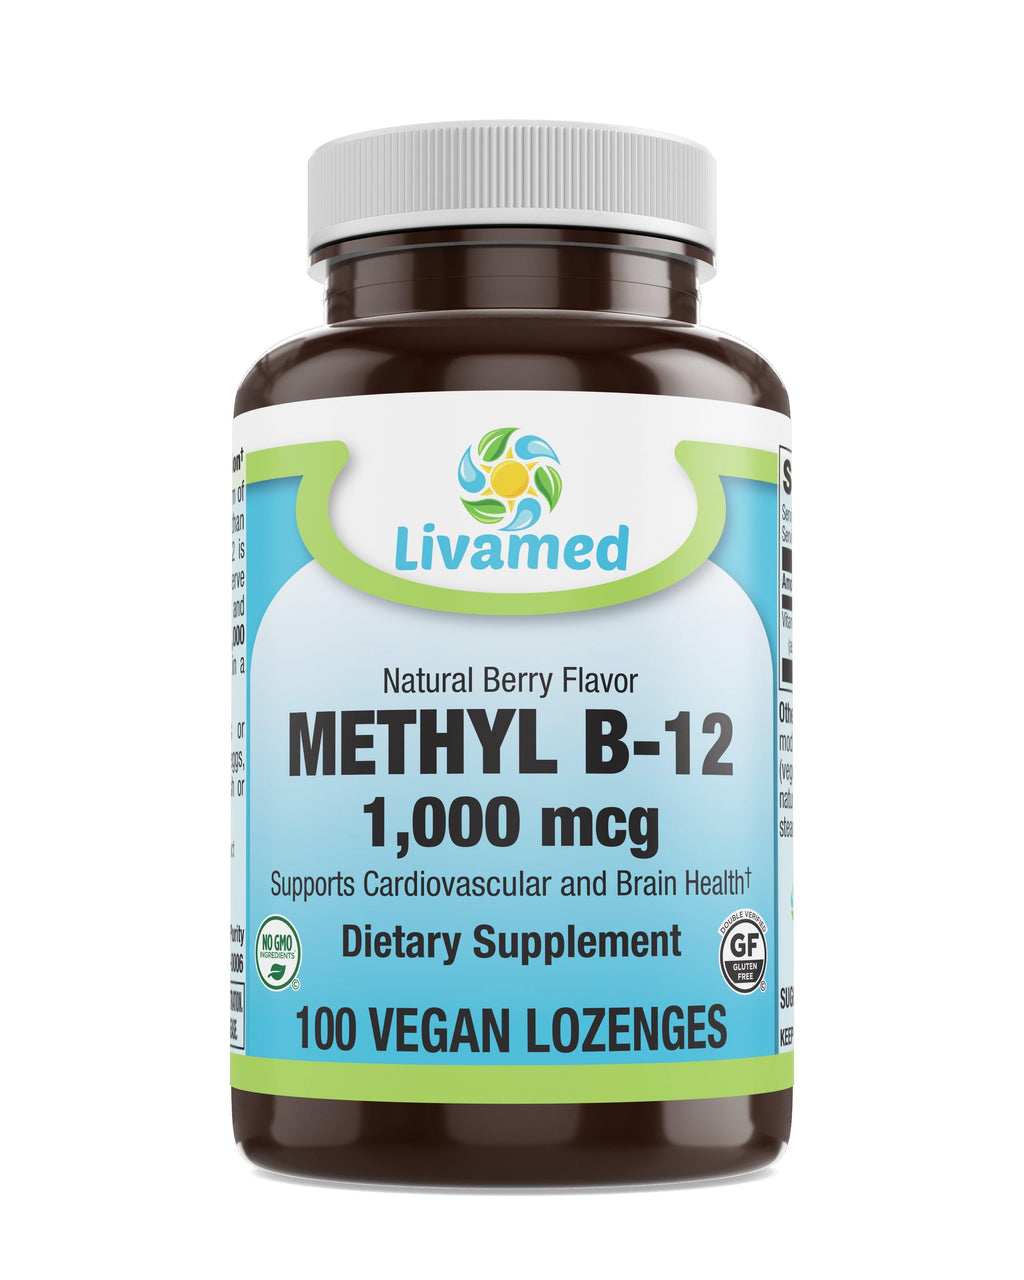 Livamed - Methyl B12 1,000 mcg Veg Lozenge - Natural Berry Flavor 100 Count - Livamed Vitamins